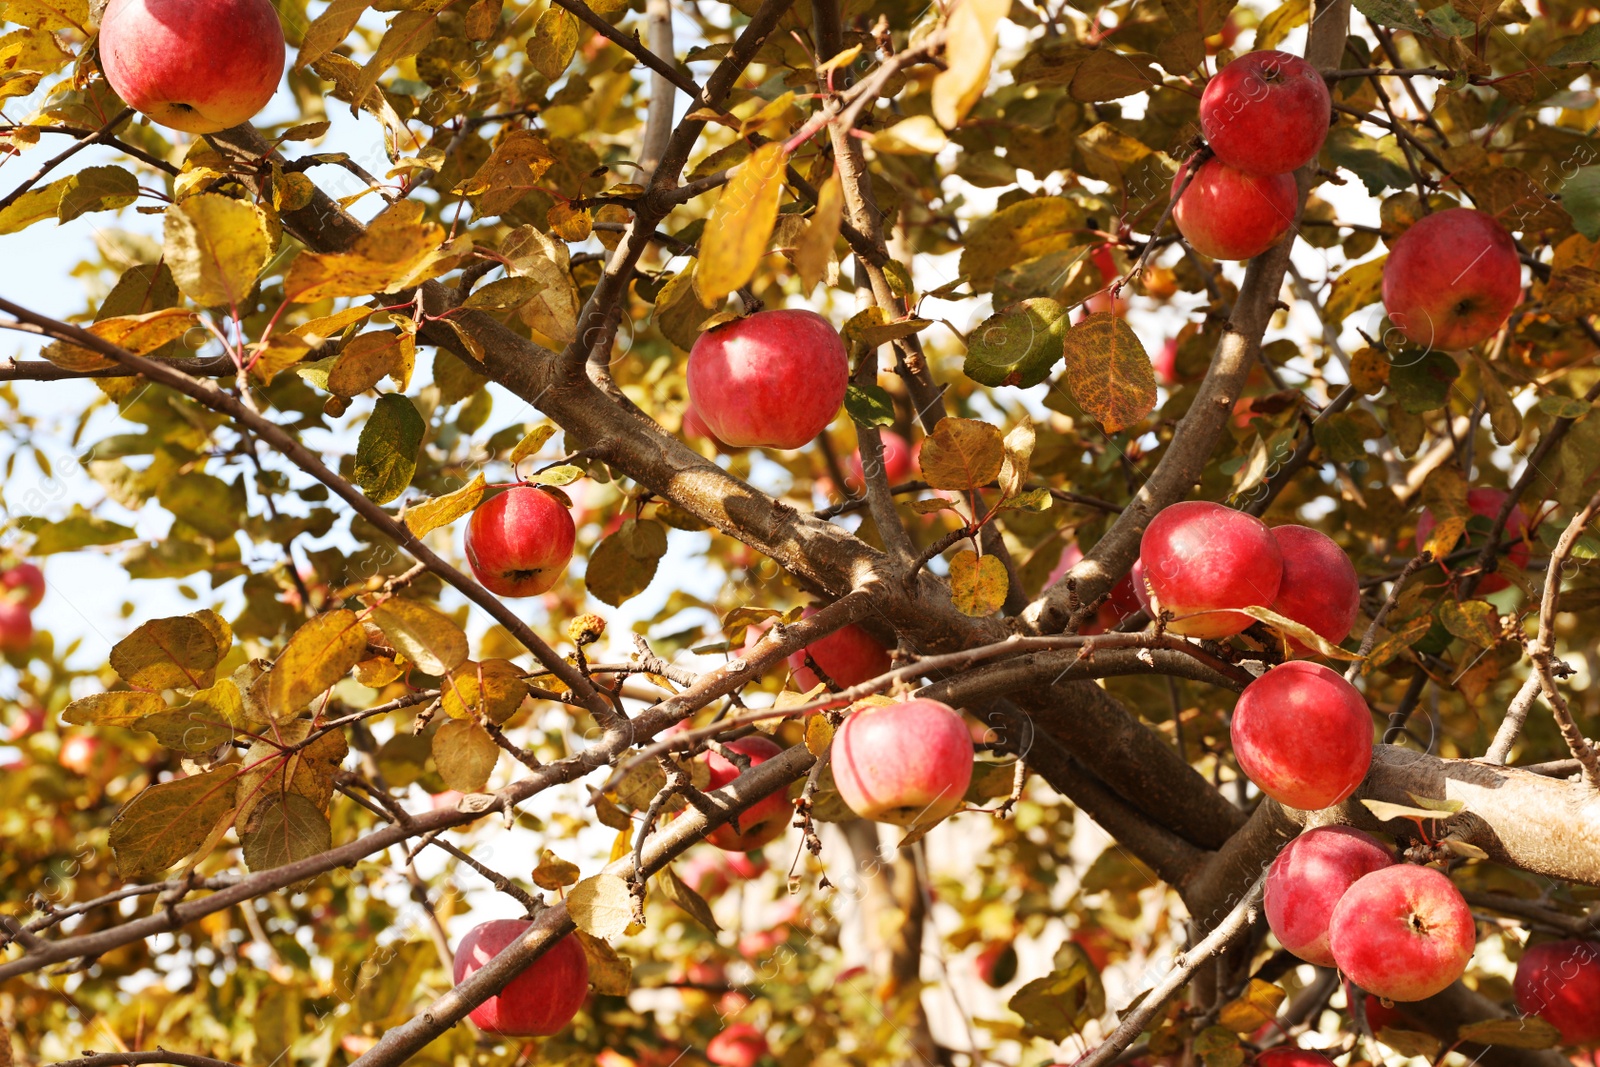 Photo of Ripe apples on tree branch in garden